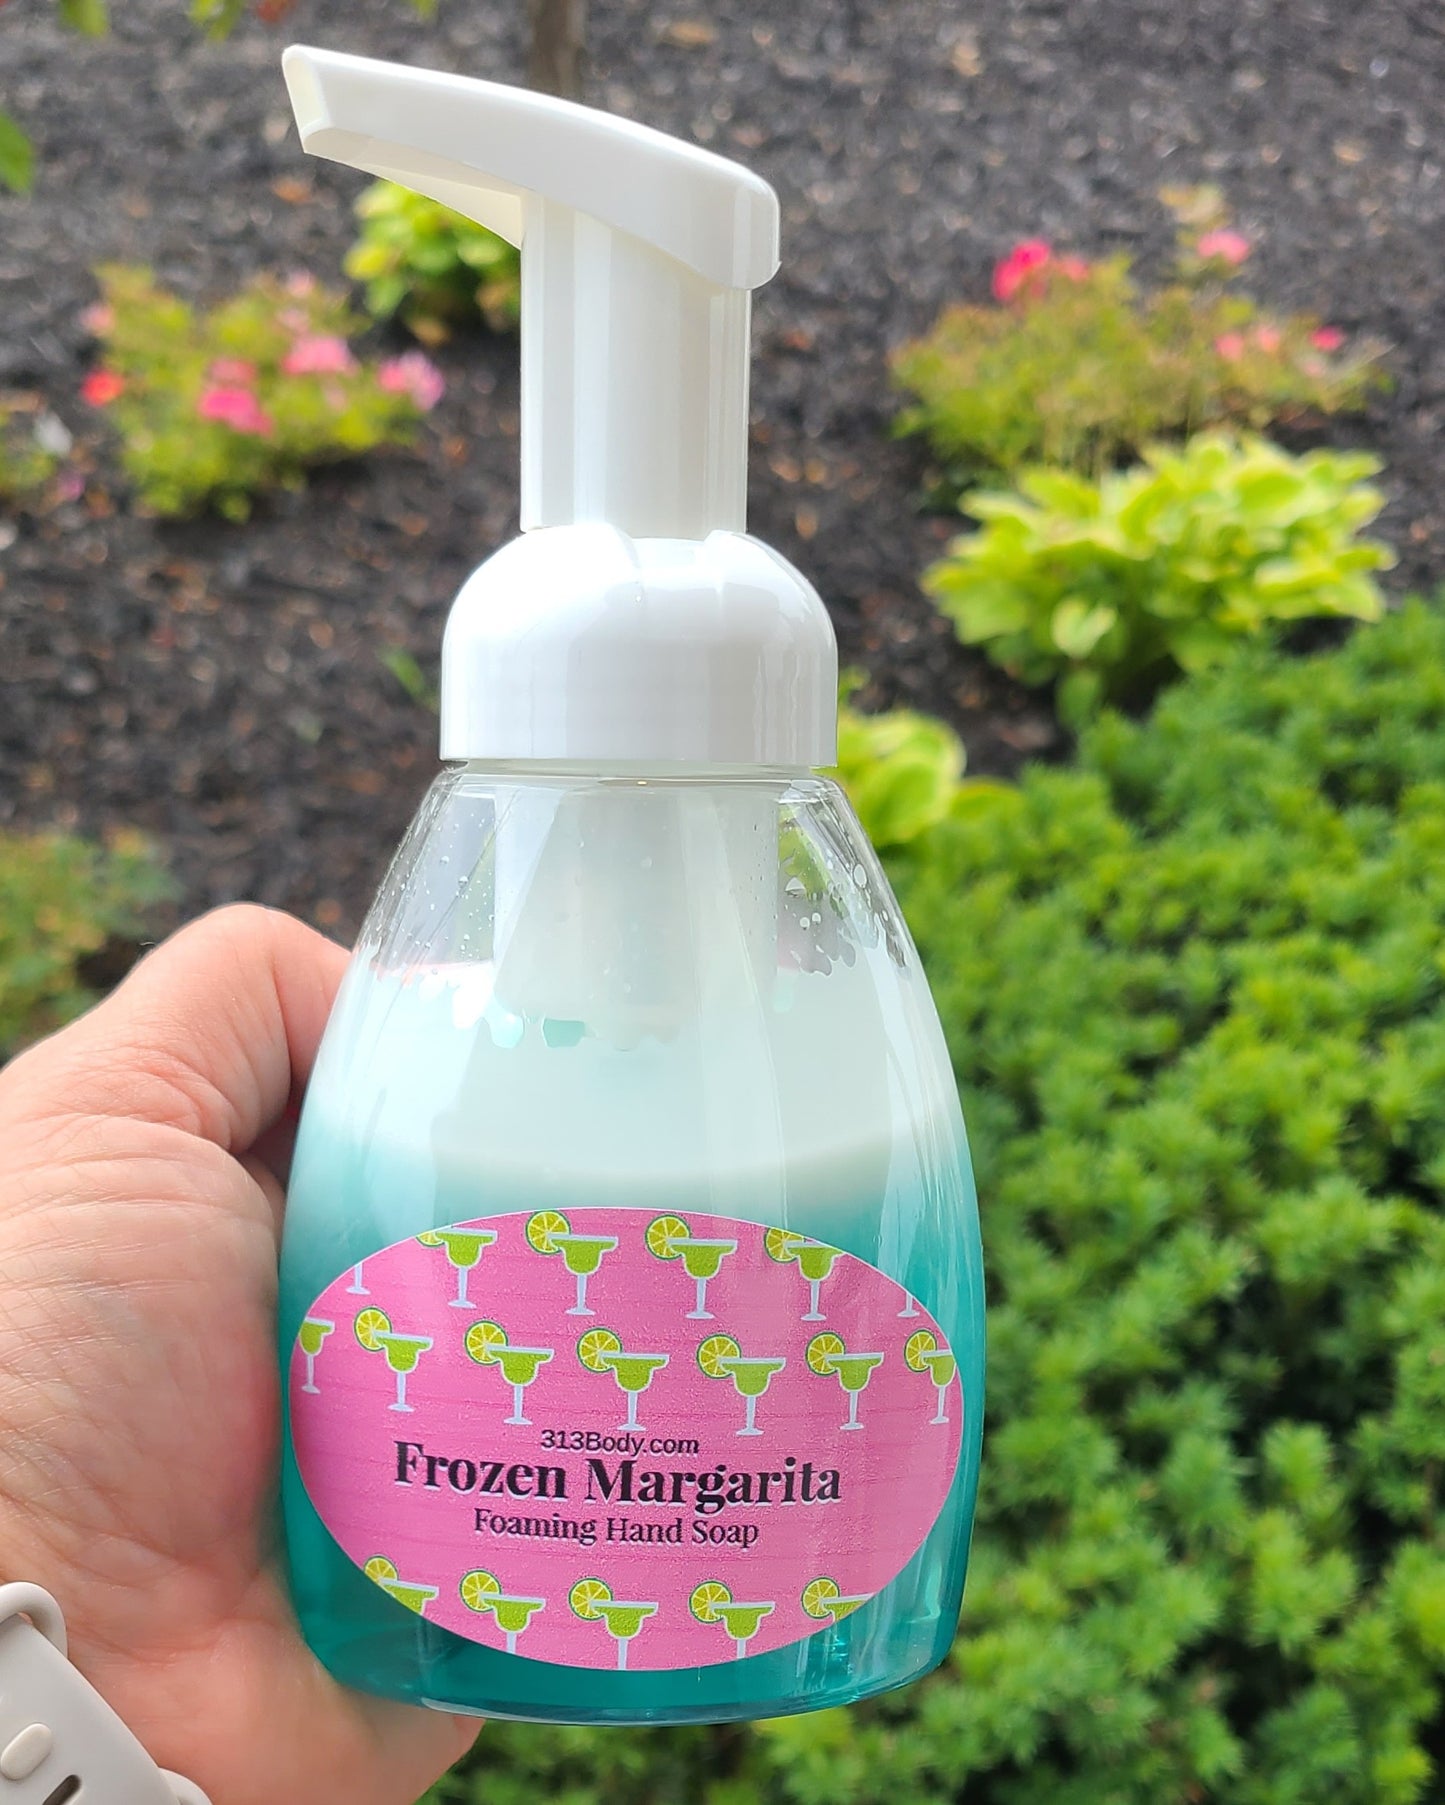 Foaming Hand Soap - Frozen Margarita